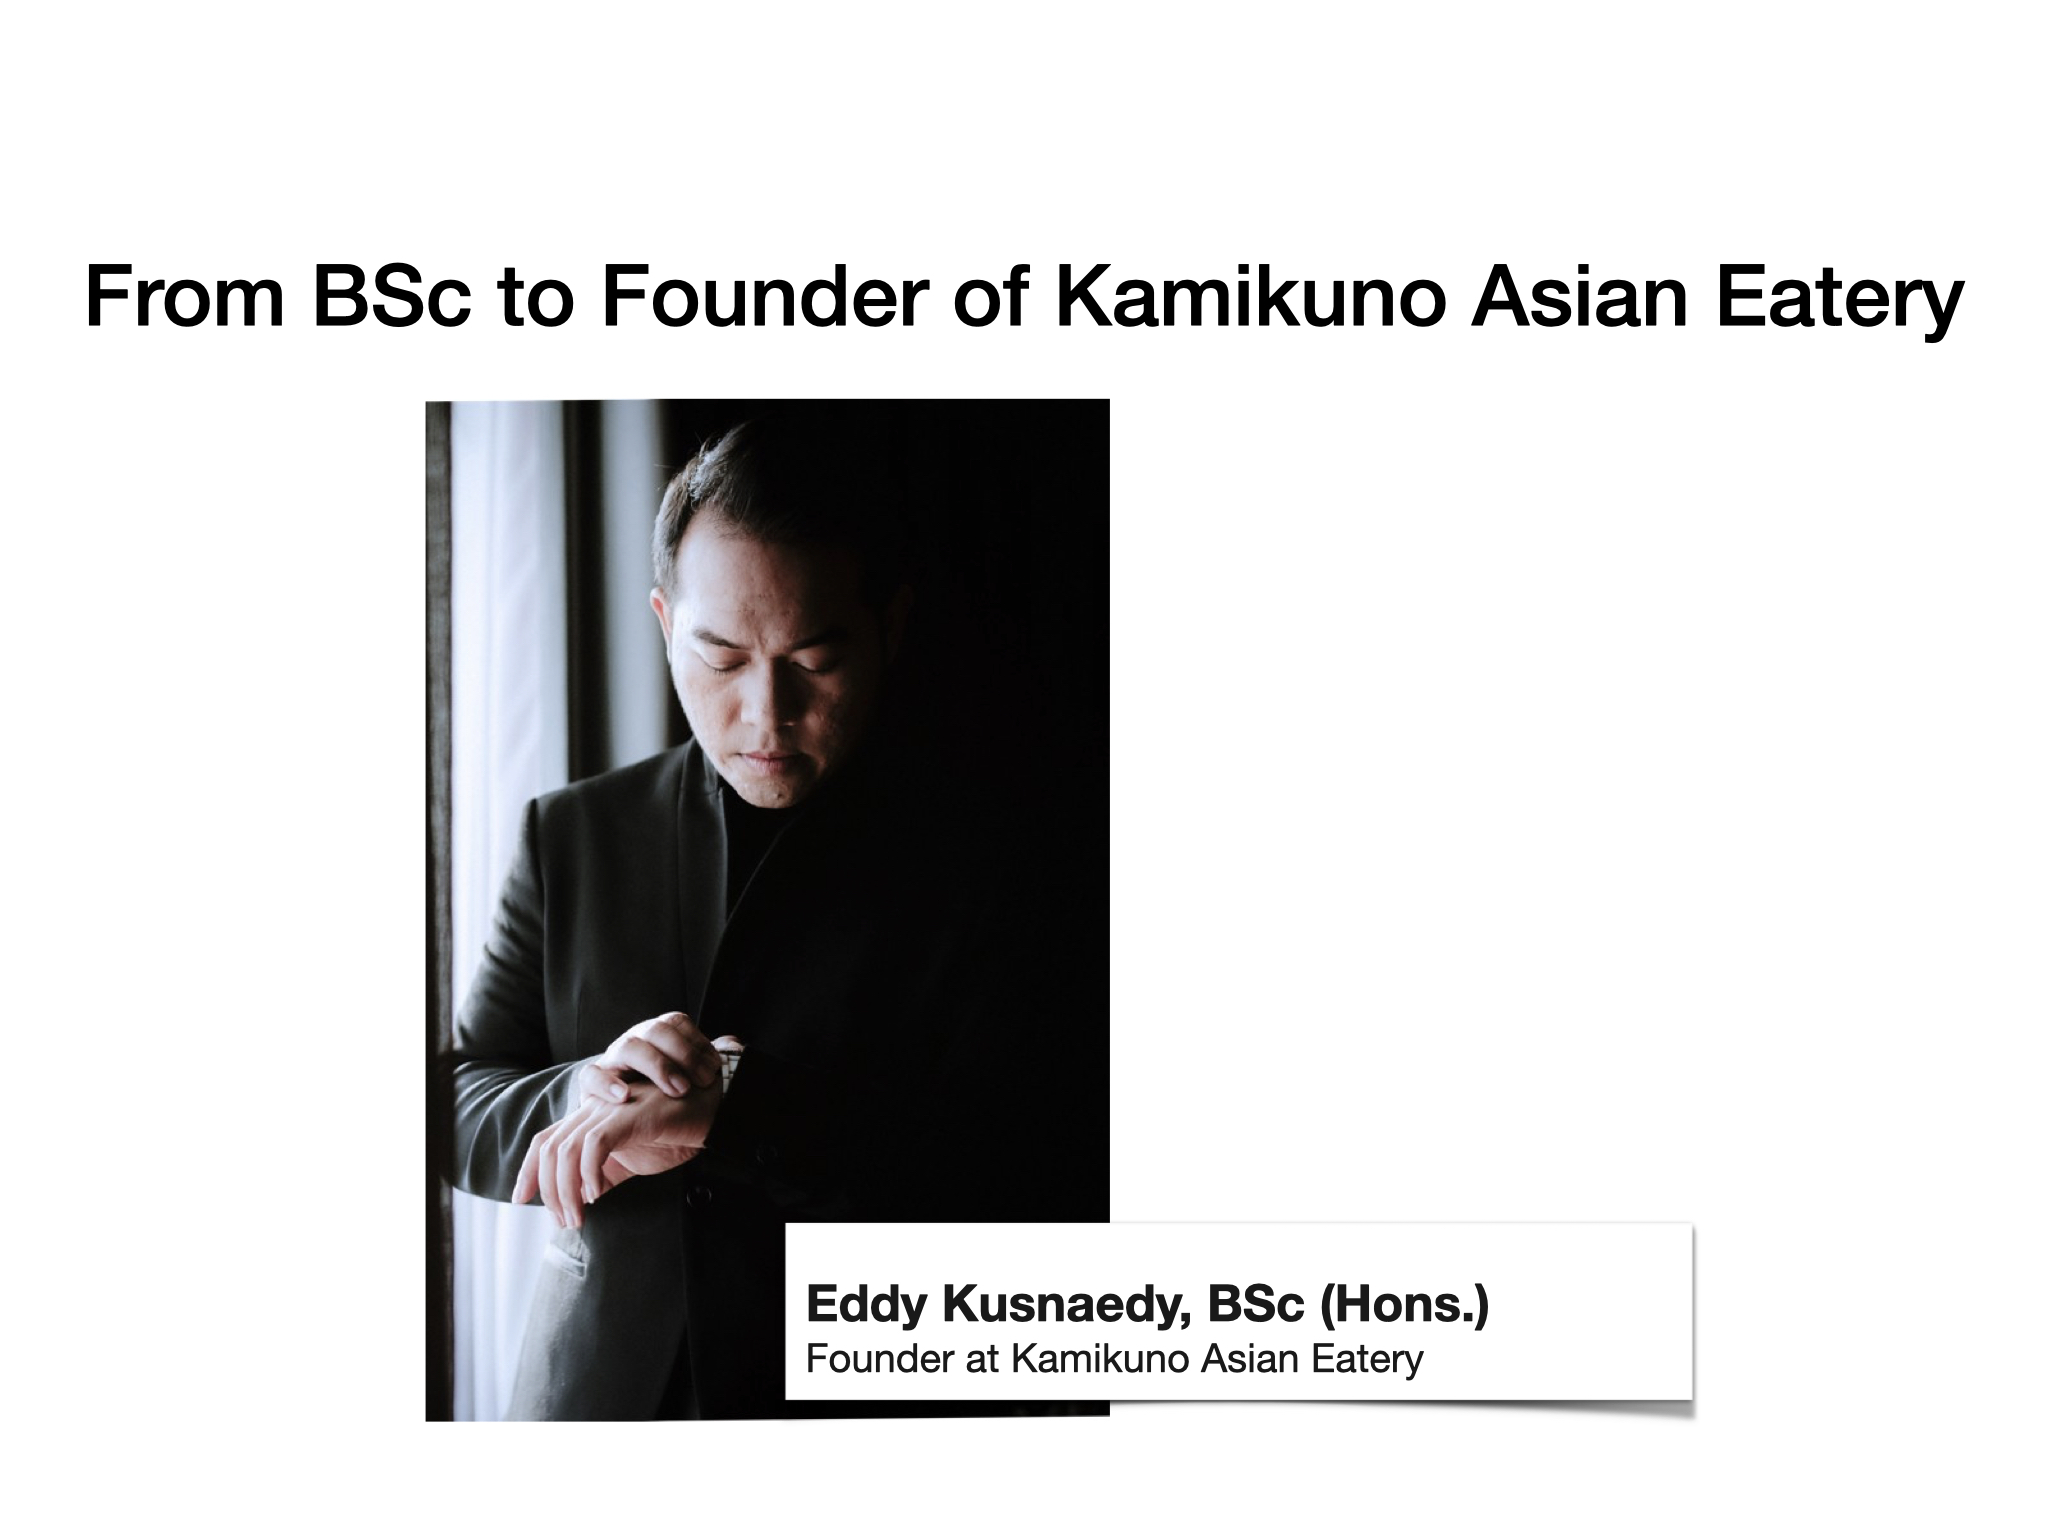 Eddy Kusnaedy BSc to Founder of Kamikuno